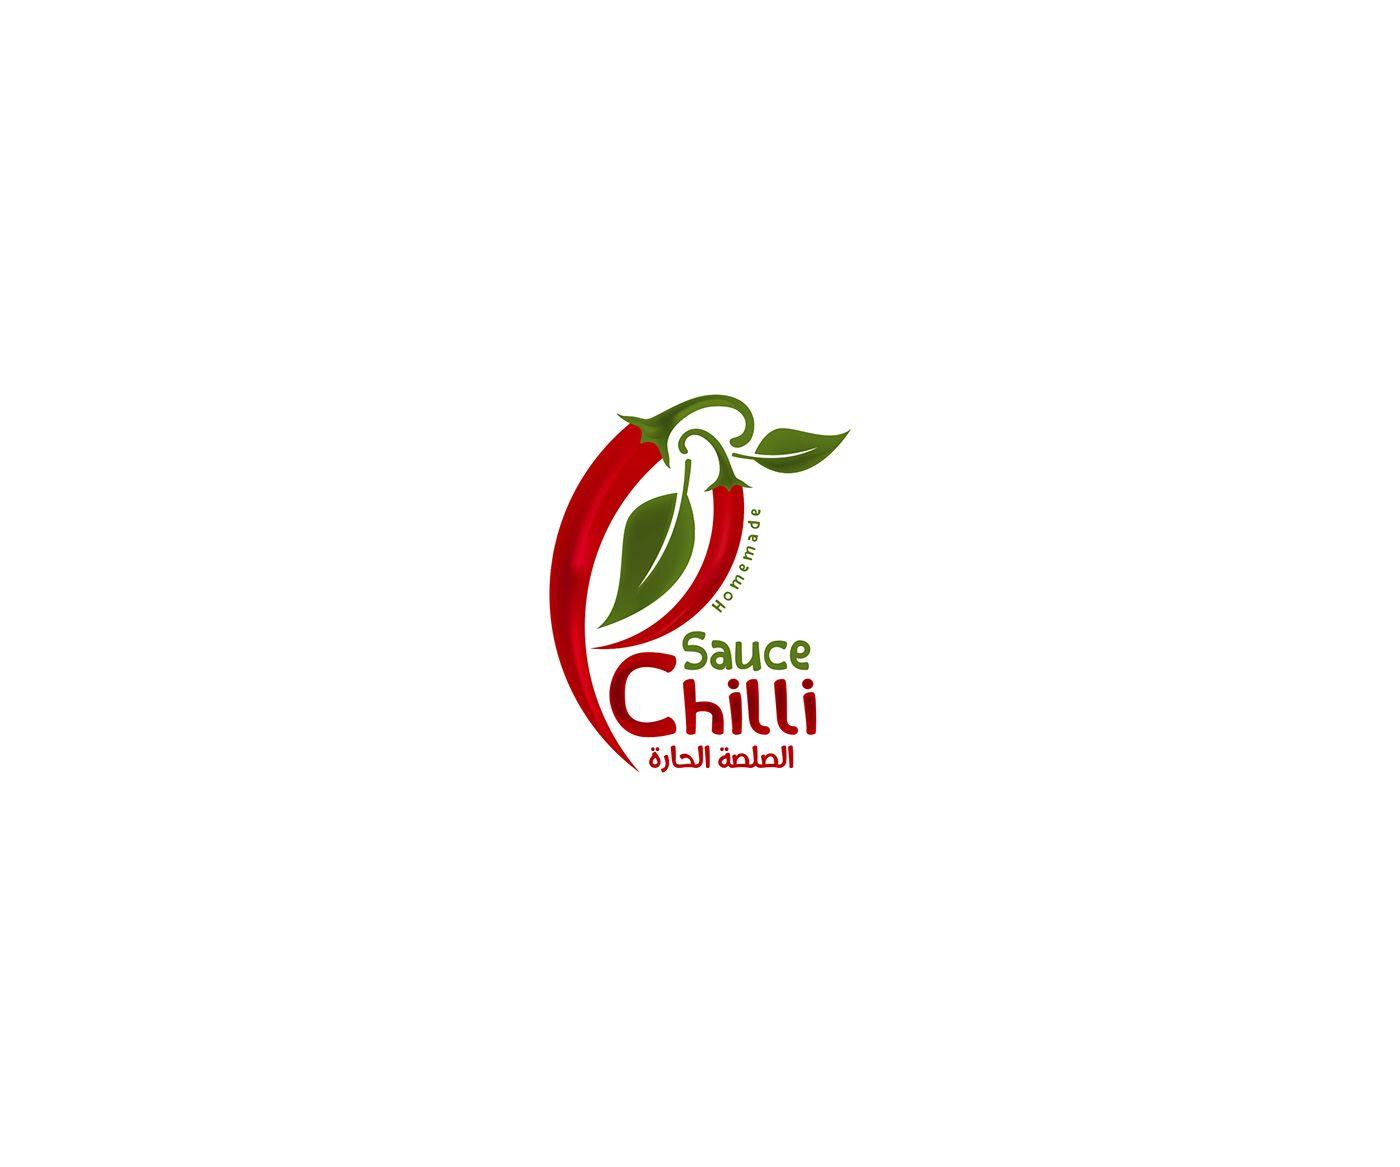 Sauce Logo - Chilli Sauce Logo Design on Behance